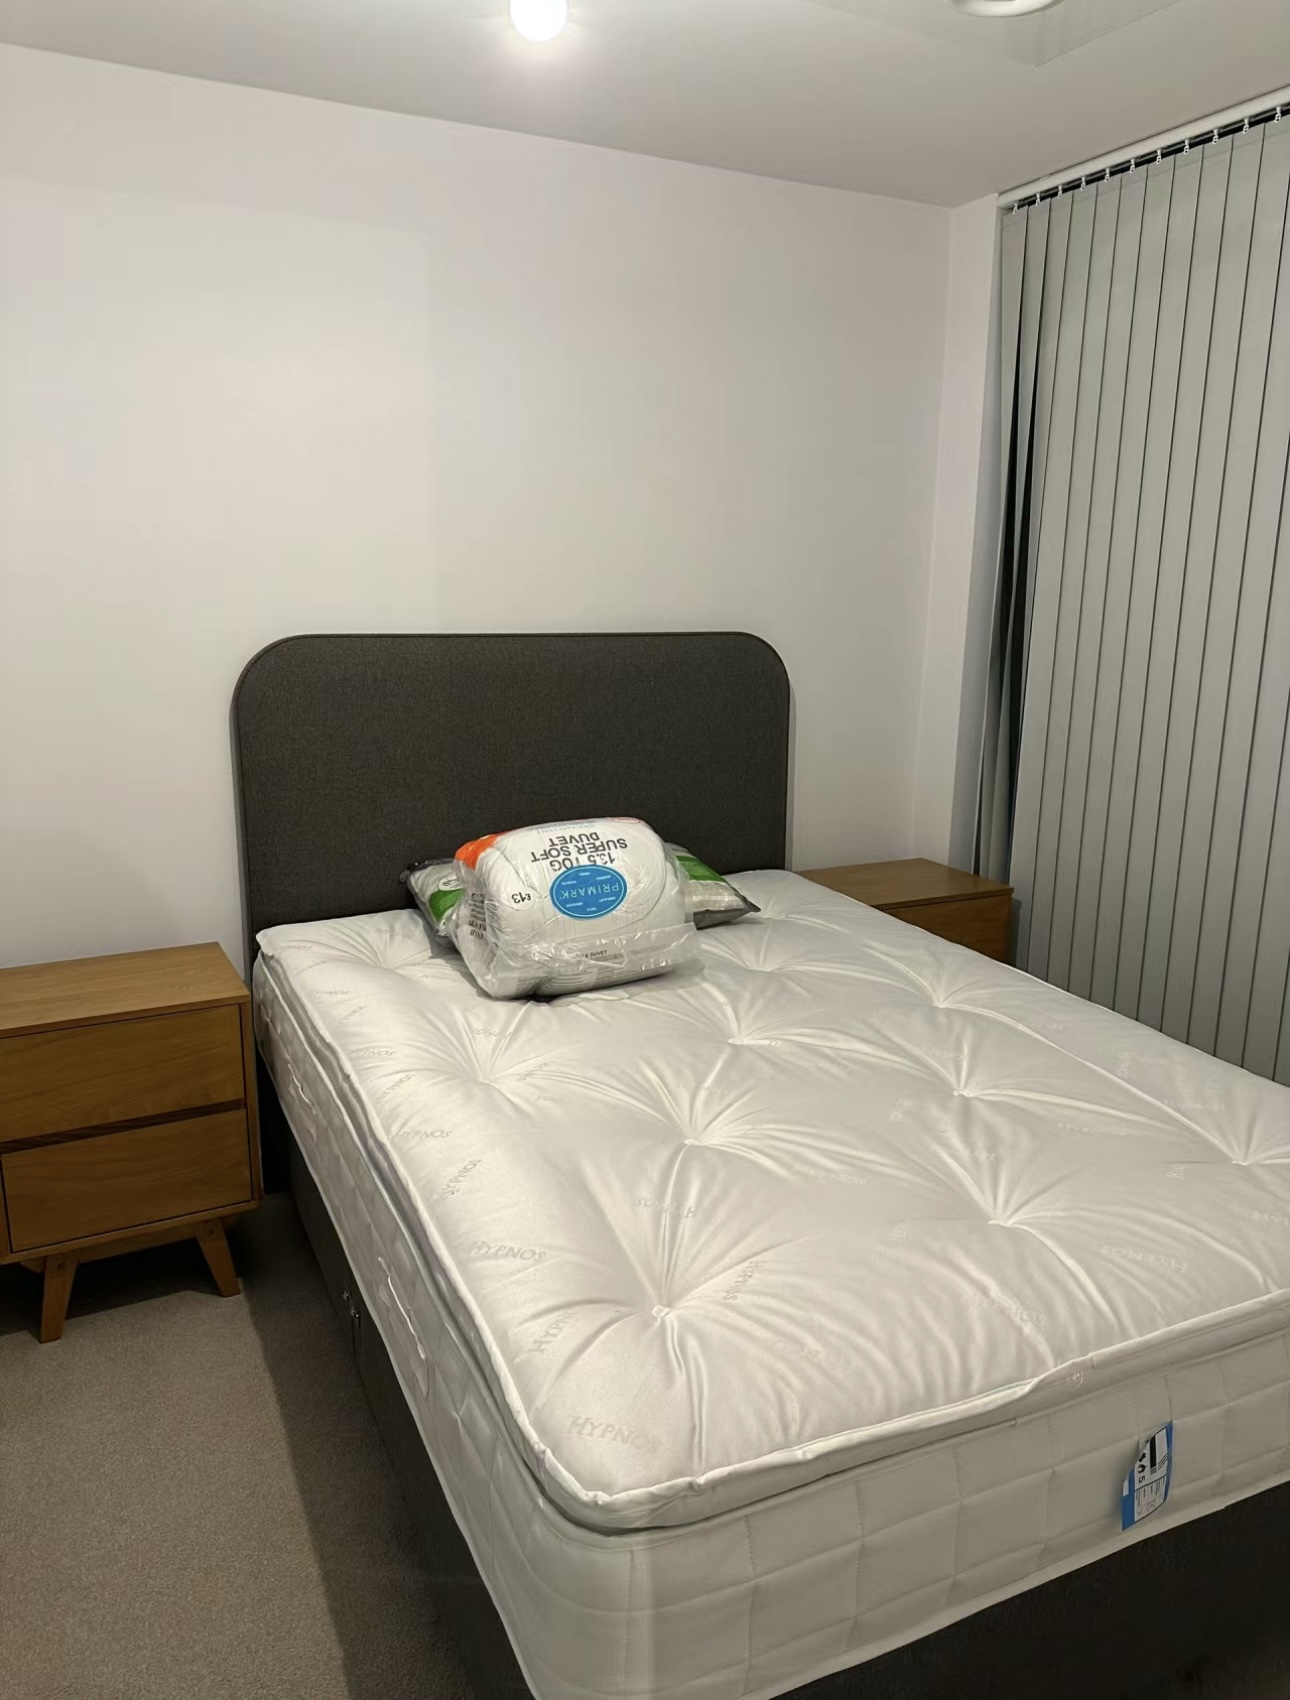 Find 1B1B (1 Bed 1 Bathroom) to rent in Birmingham